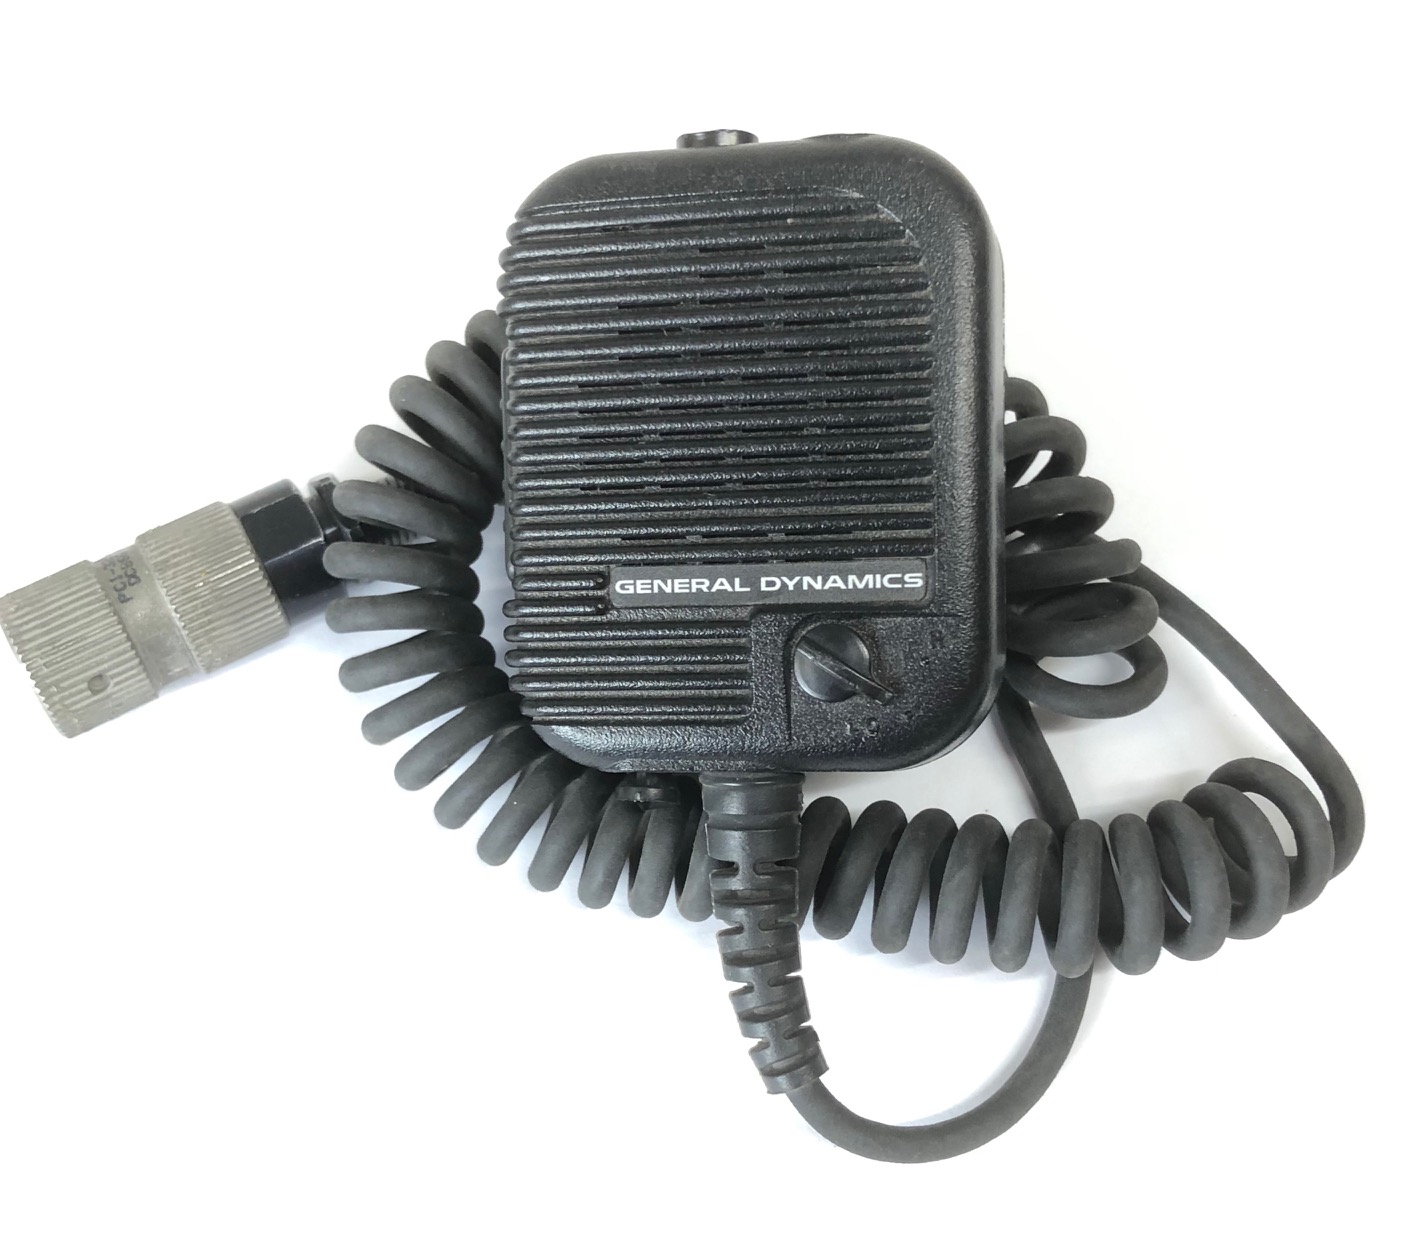 General Dynamics speaker mic